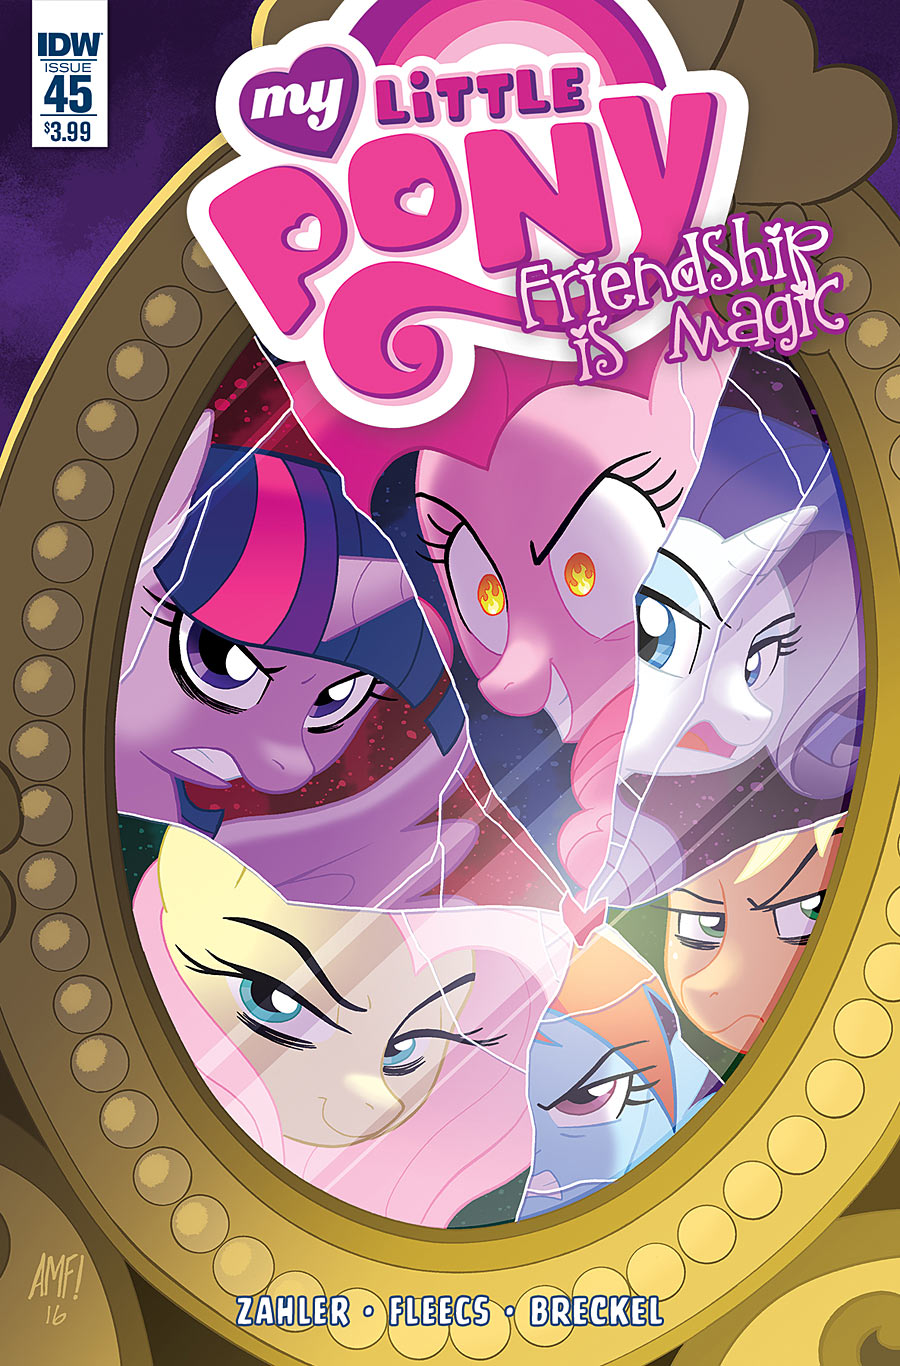 My Little Pony: Friendship is Magic #45